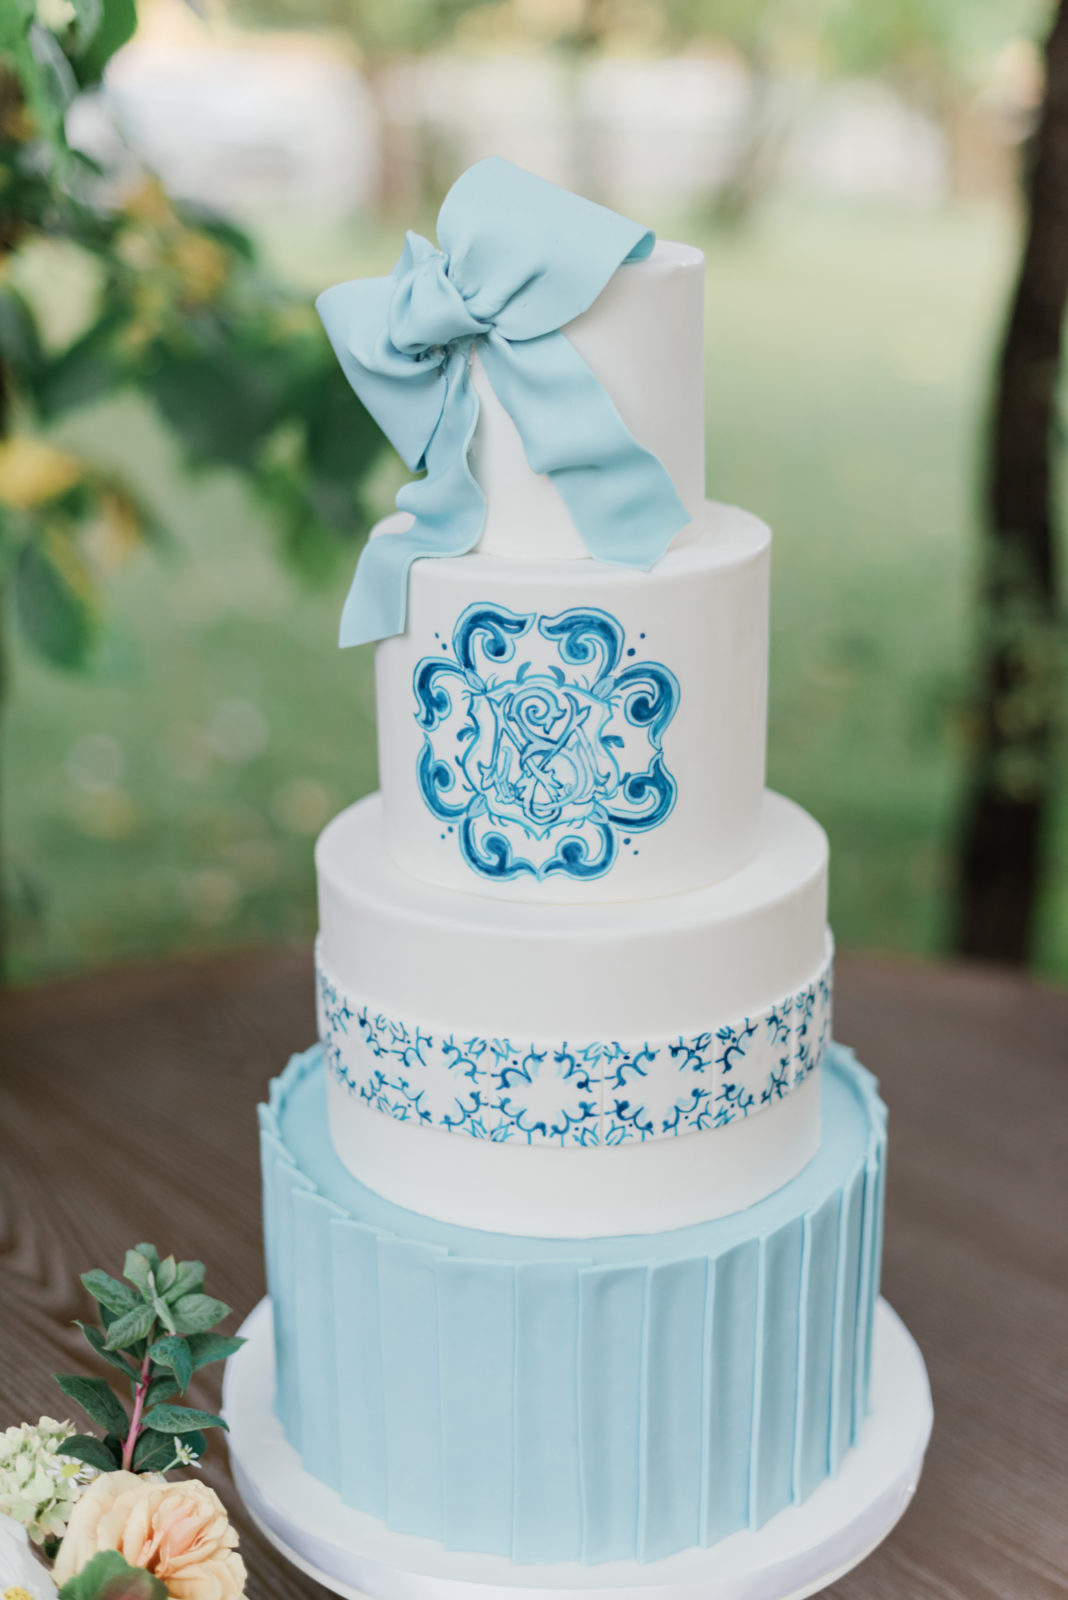 Blue and white tile inspired wedding cake